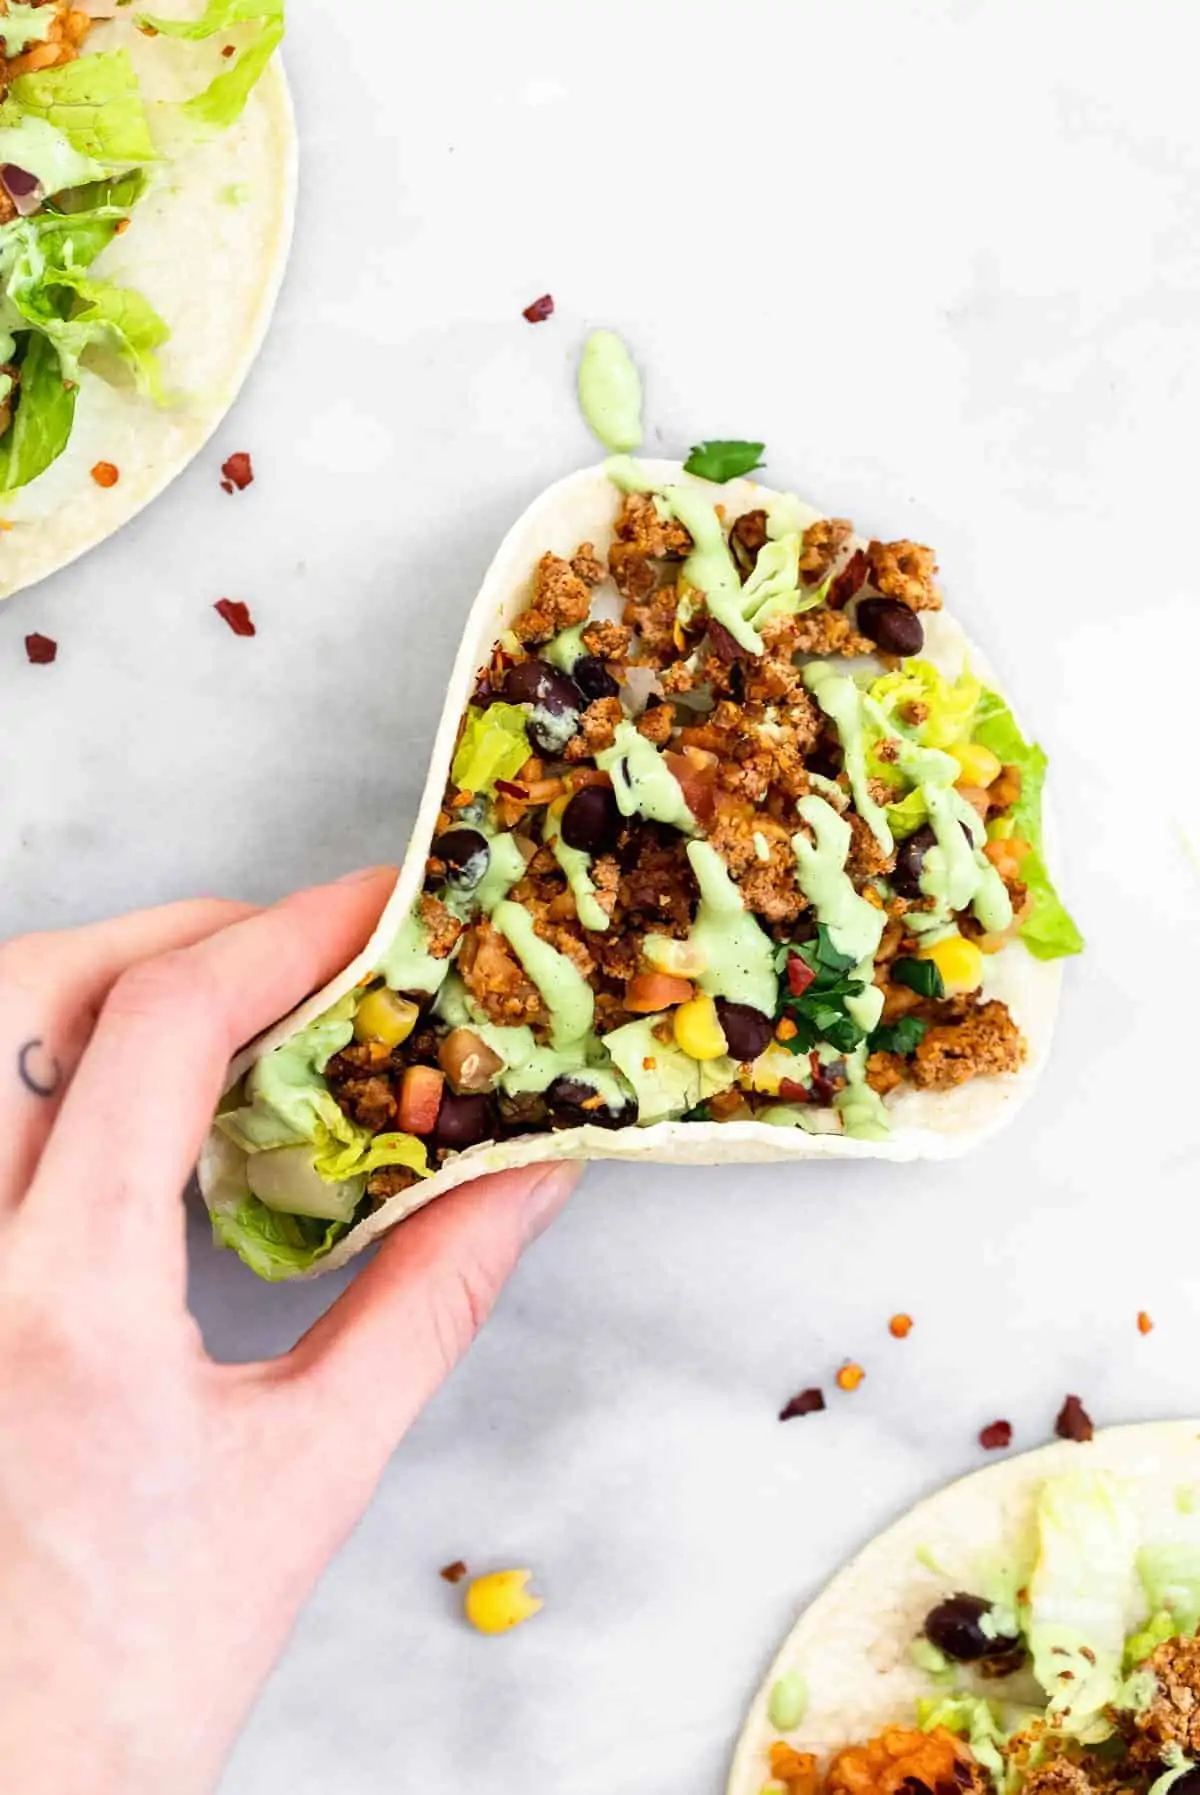 Hand grabbing a vegan taco with crema on top